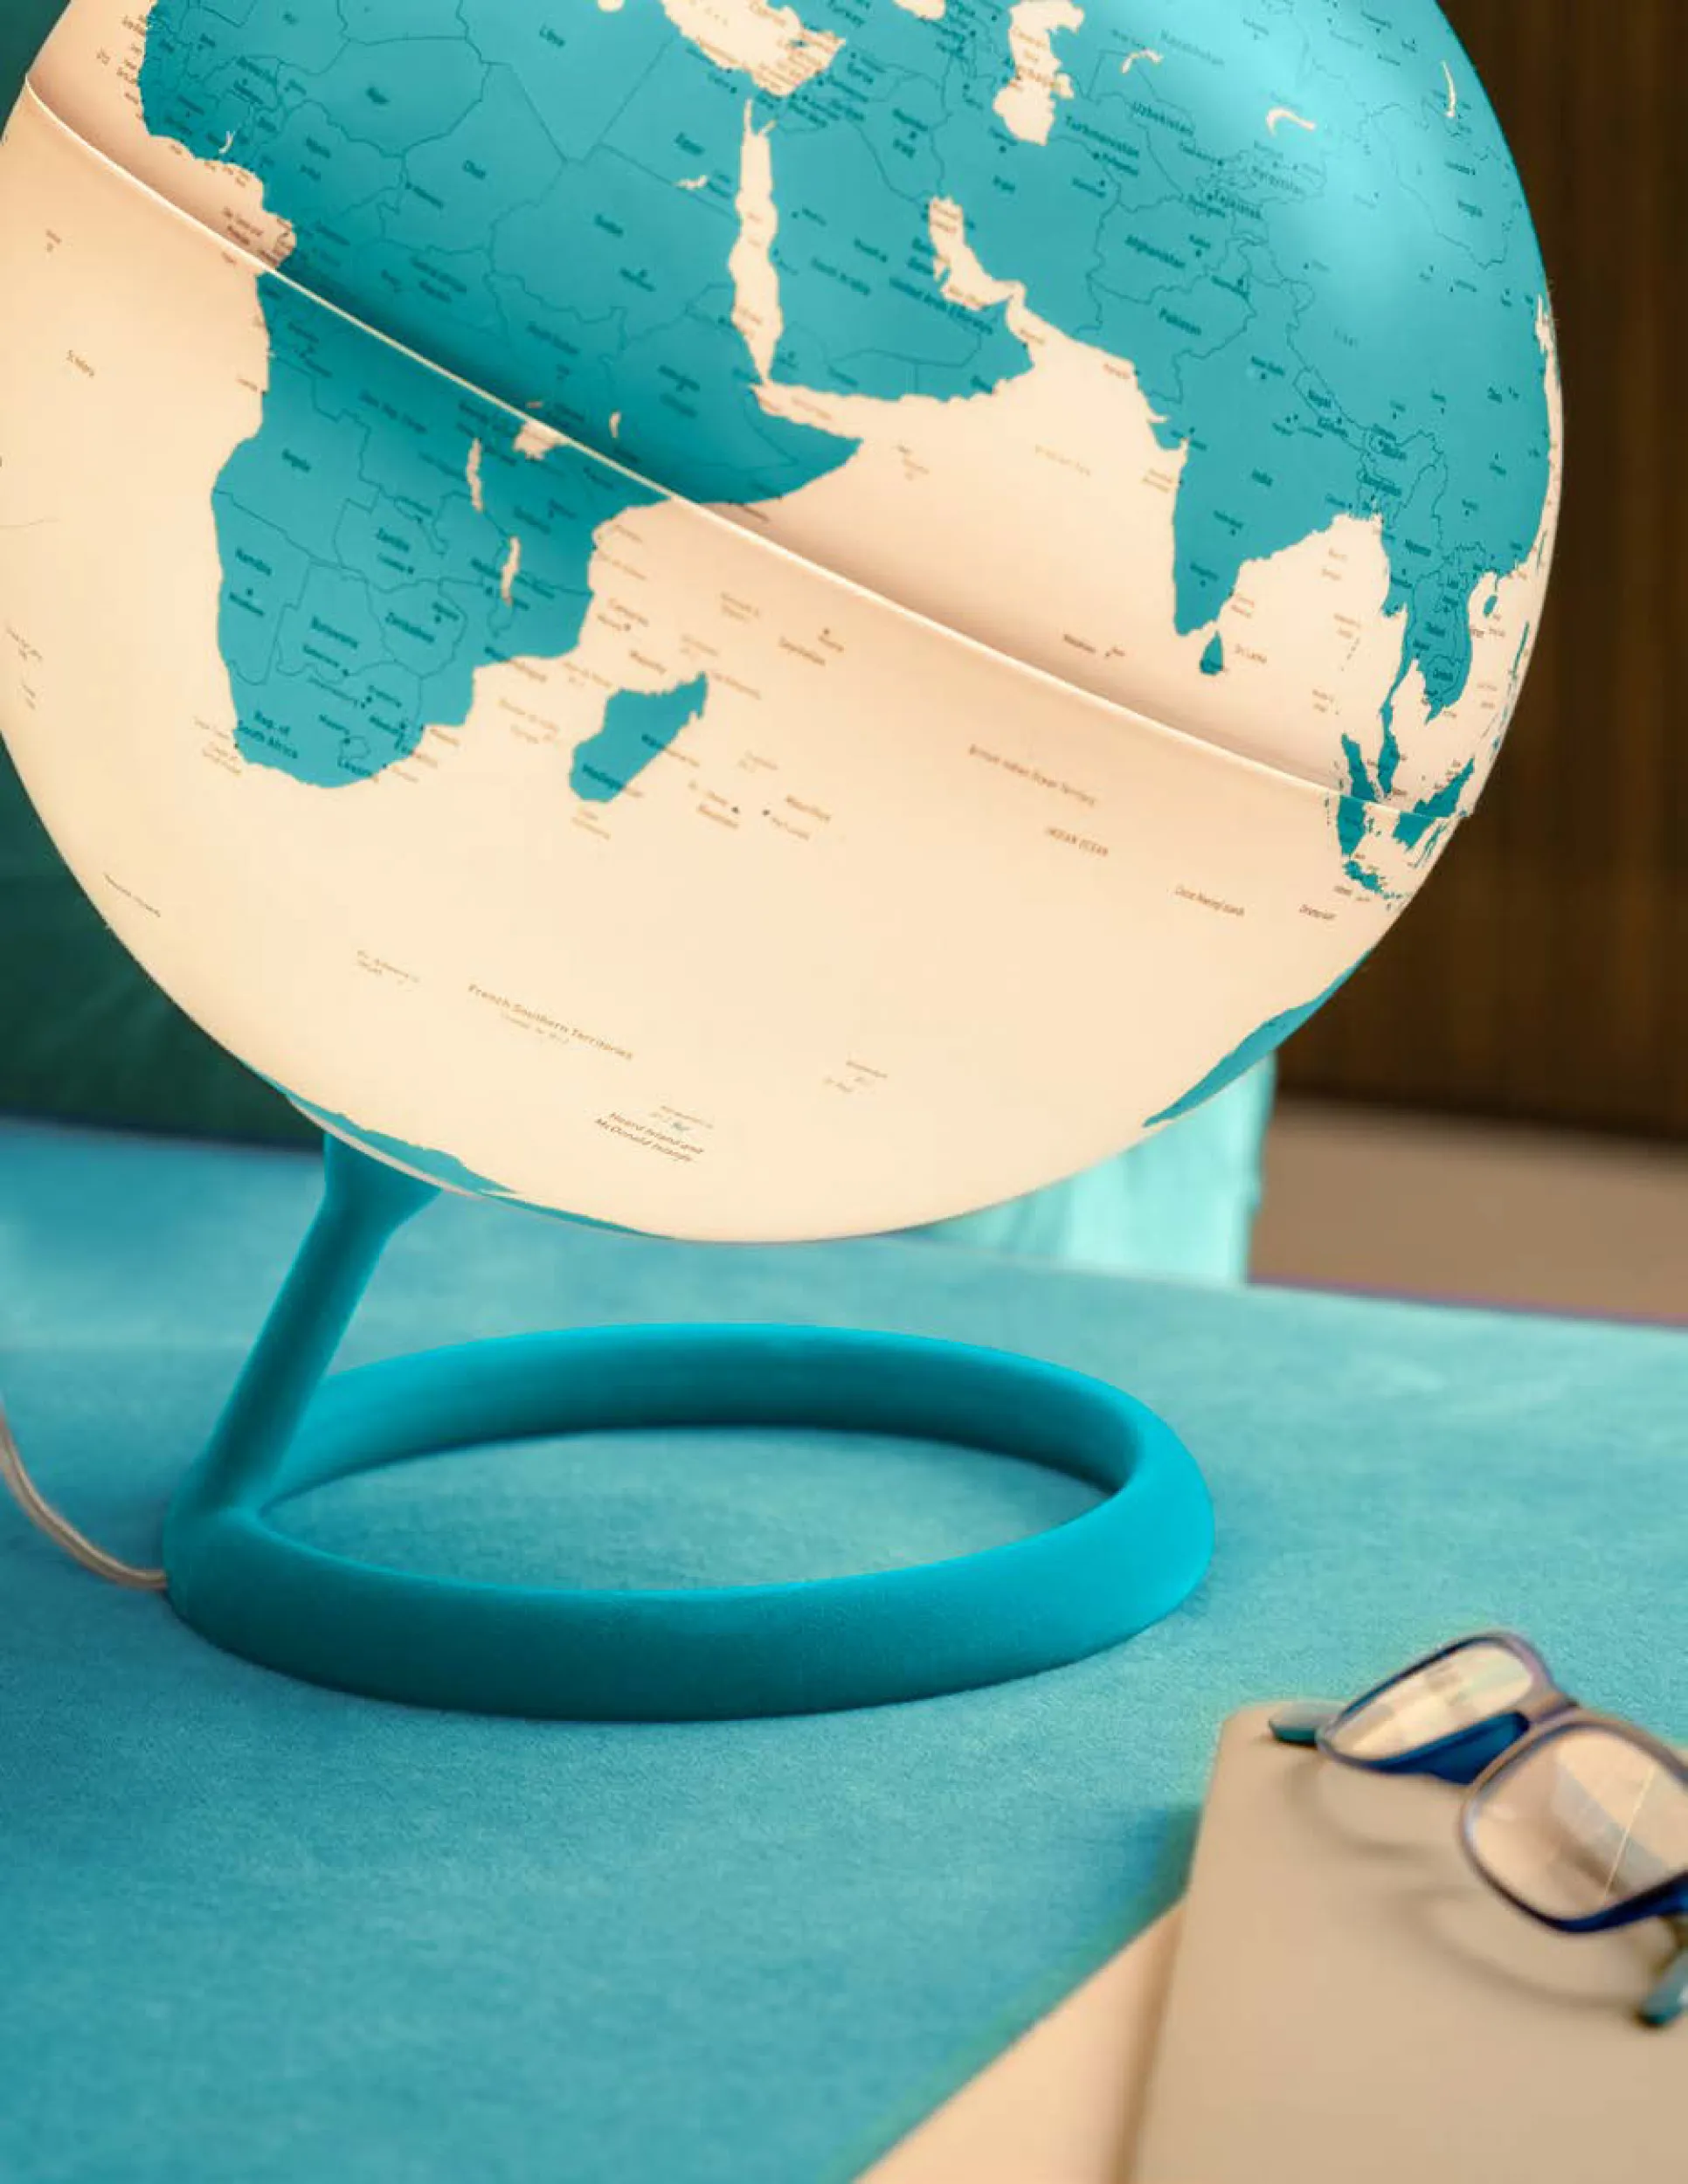 evolve Zaffiro design globe turquoise